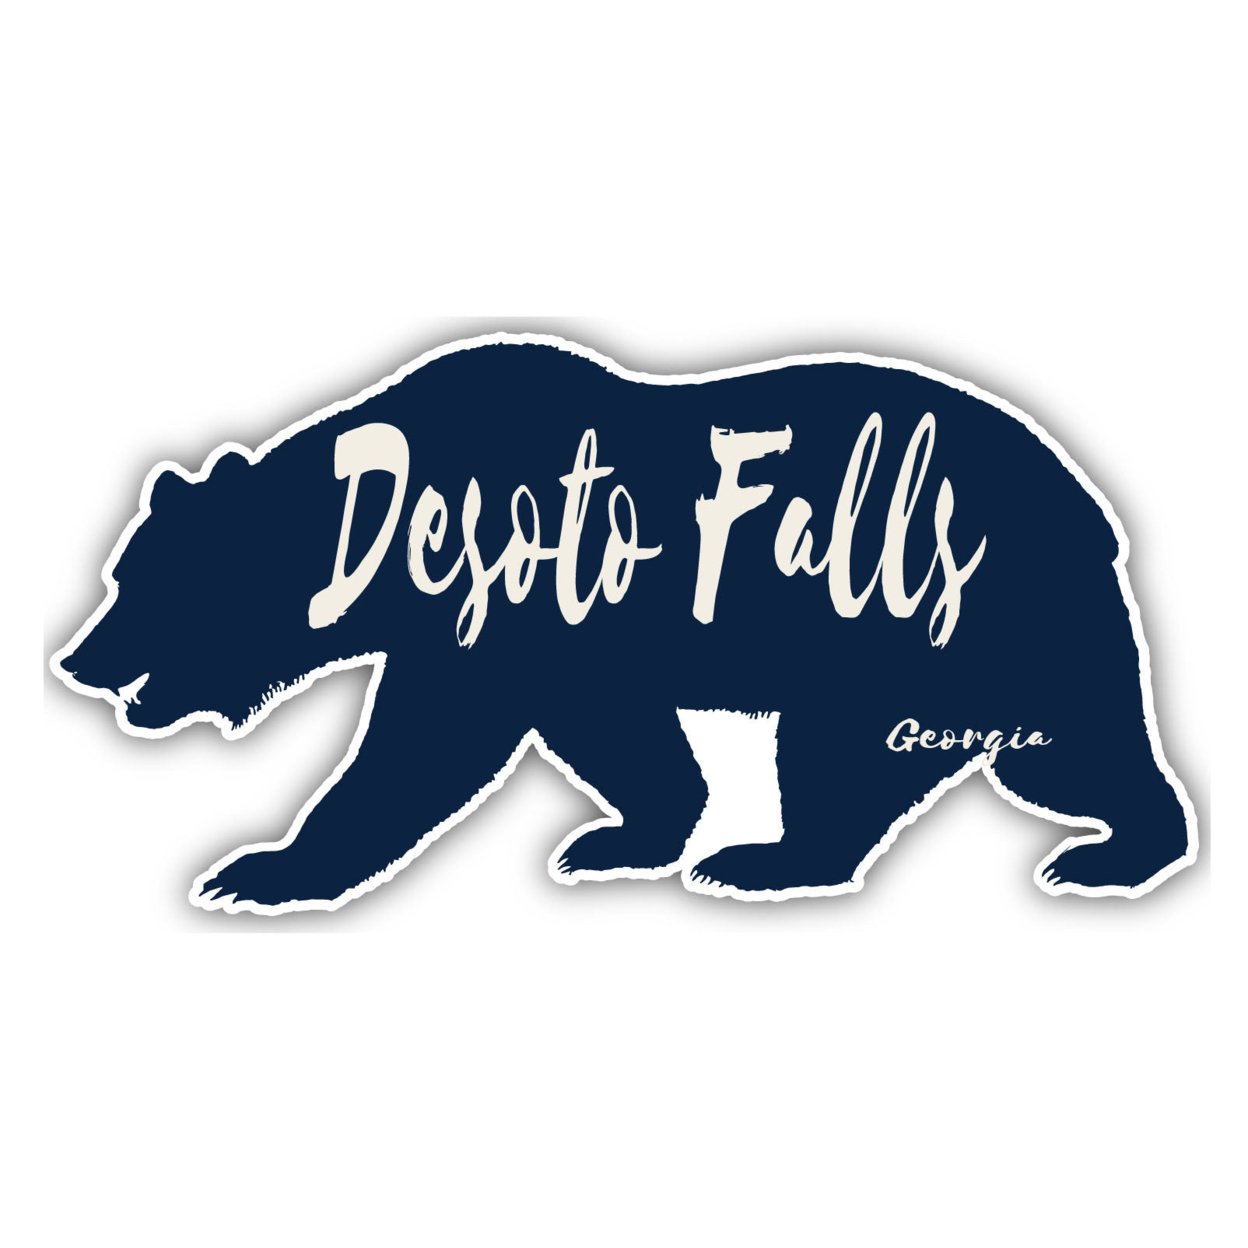 DeSoto Falls Georgia Souvenir Decorative Stickers (Choose Theme And Size) - 4-Pack, 10-Inch, Bear